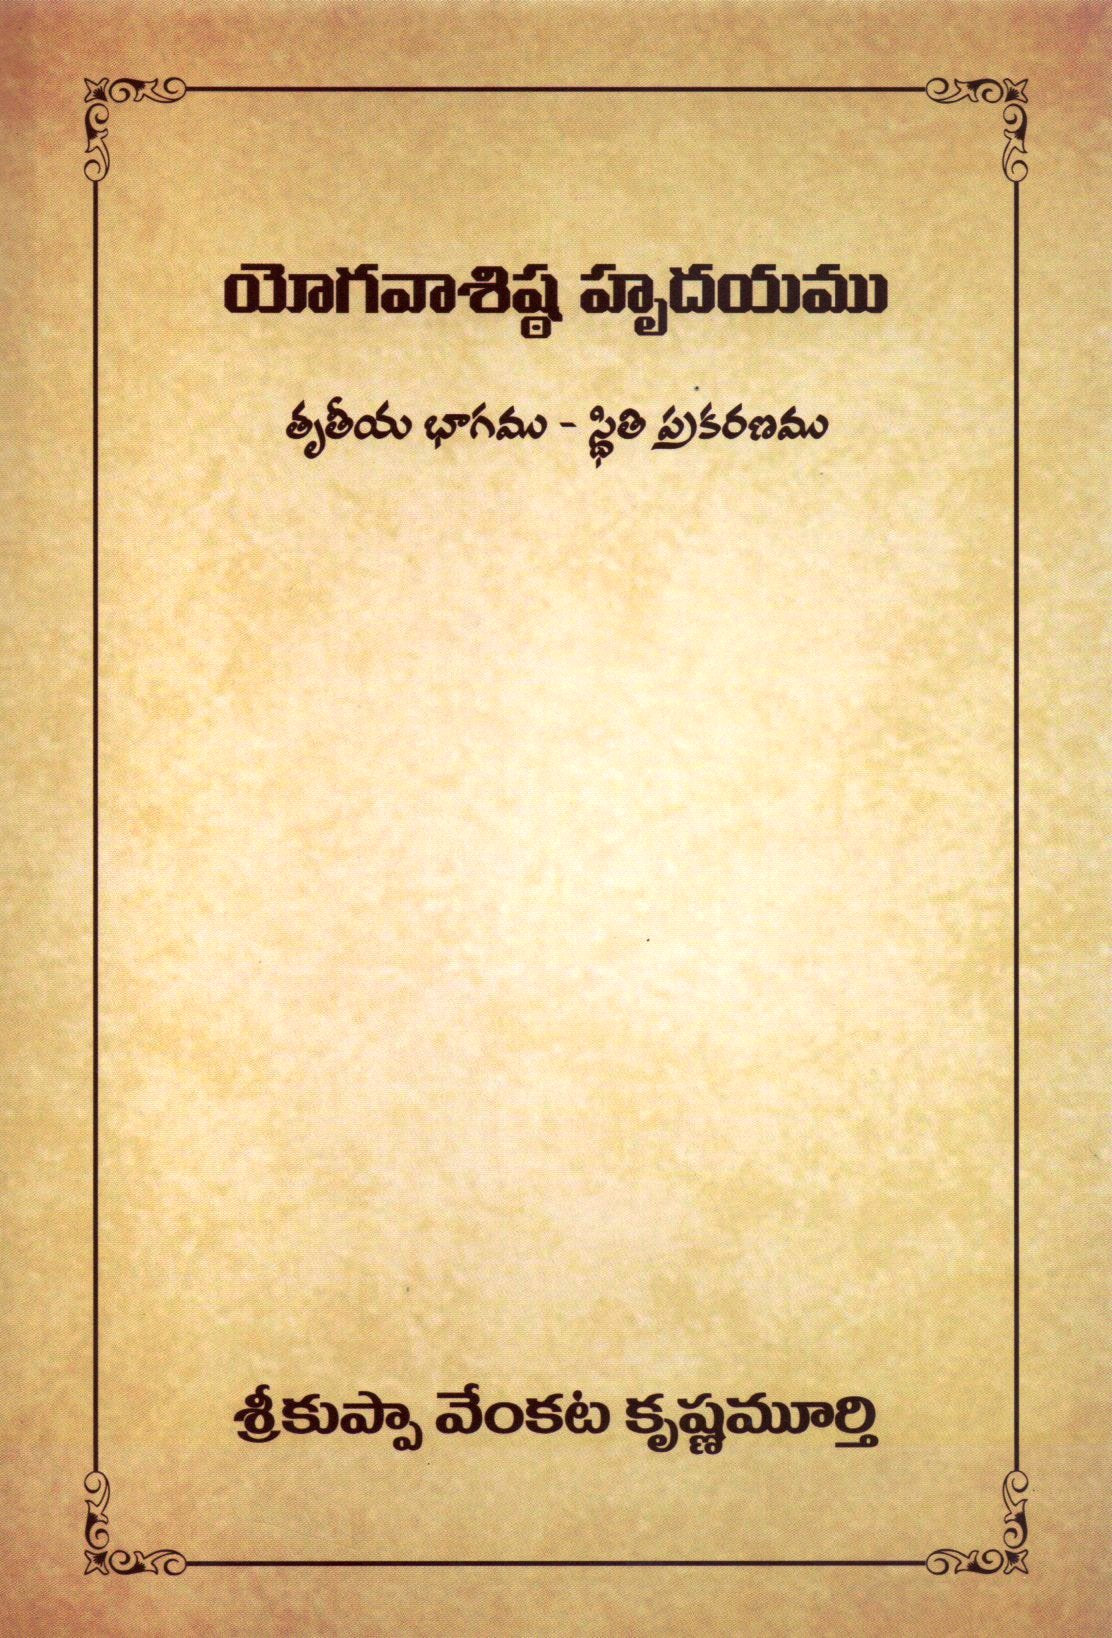 Yoga Vashishta
Hrudayam-3
(Telugu Book)